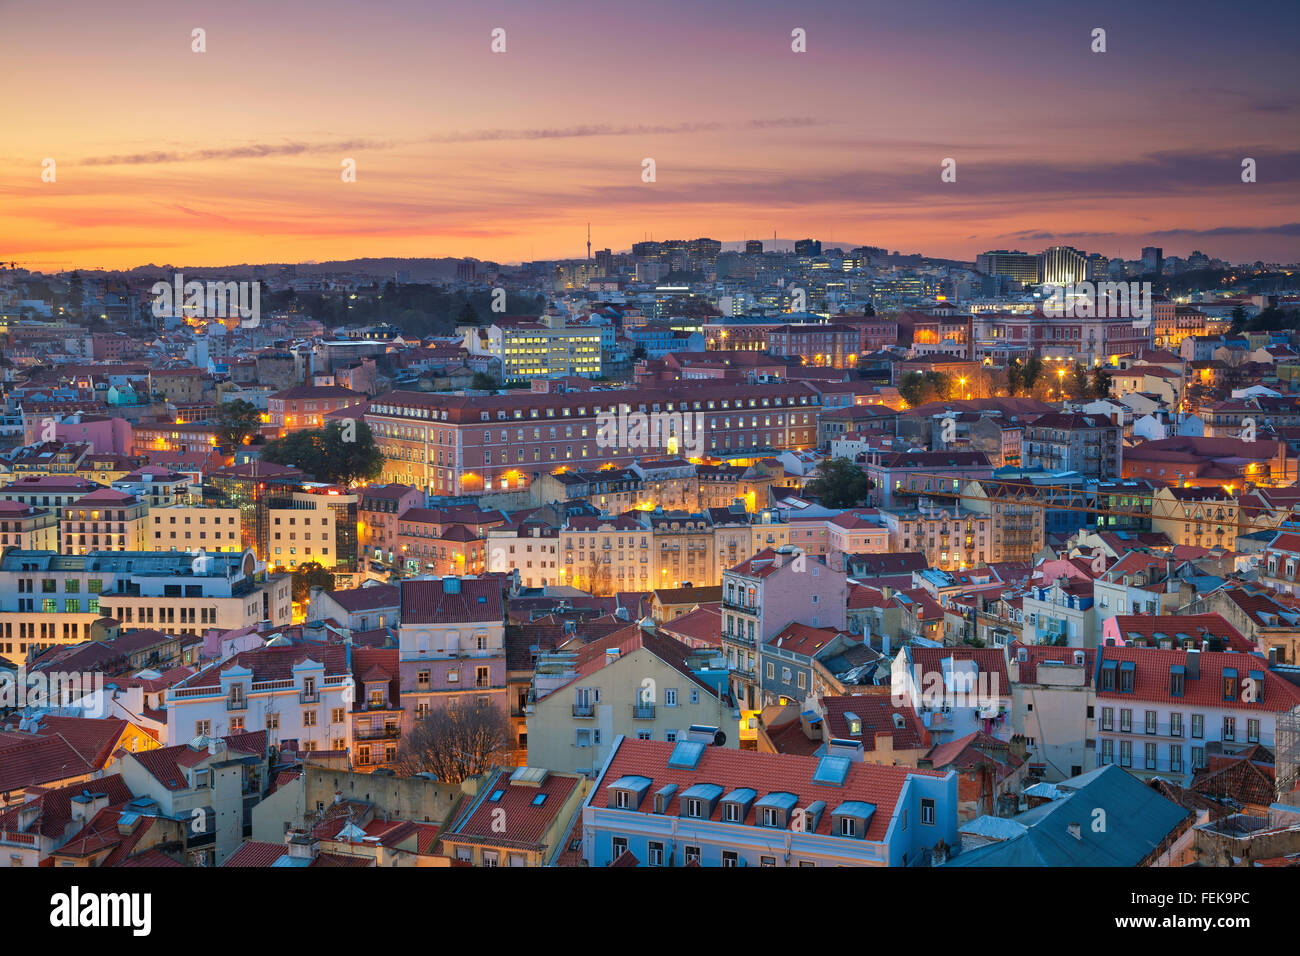 Lisbon. Image of Lisbon, Portugal during dramatic sunset. Stock Photo